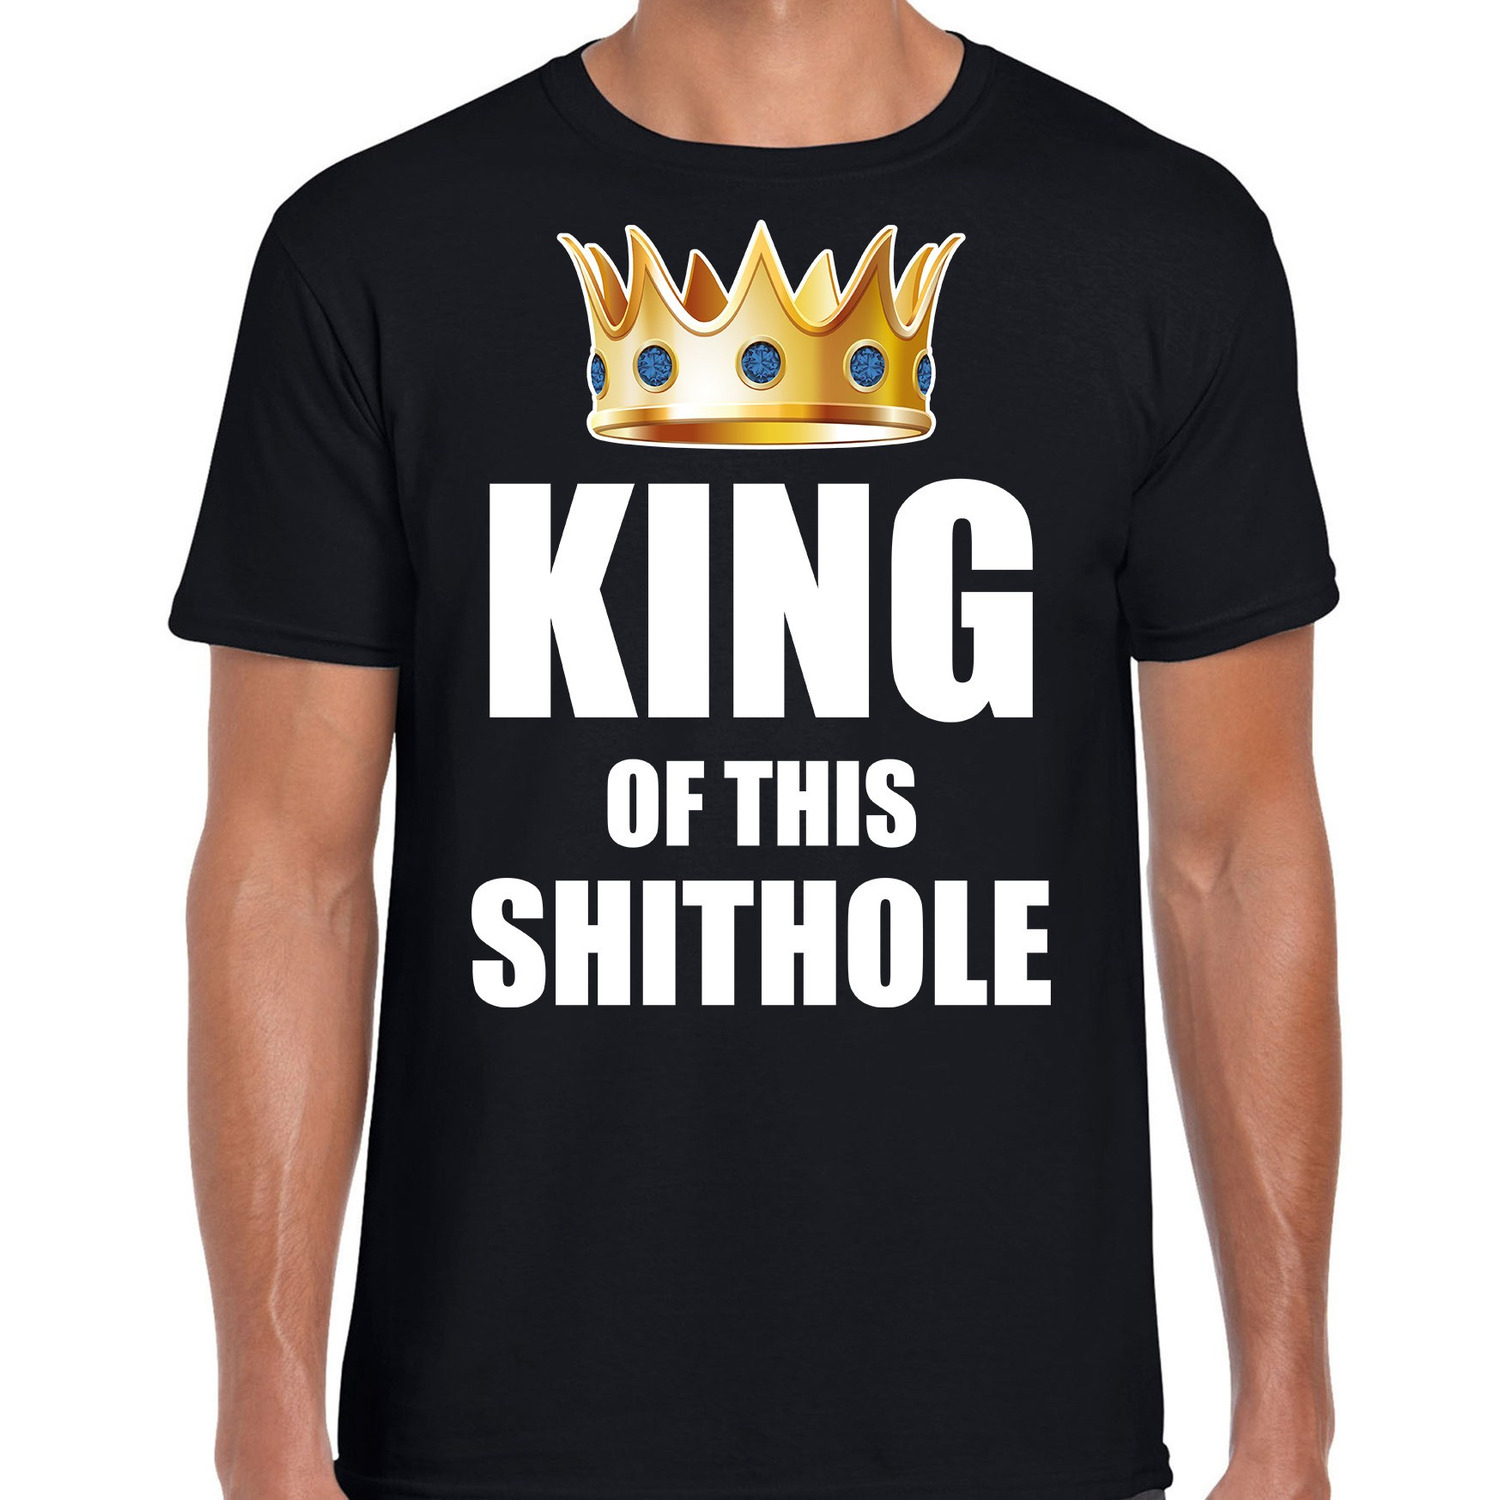 Koningsdag t-shirt King of this shit hole party zwart voor heren